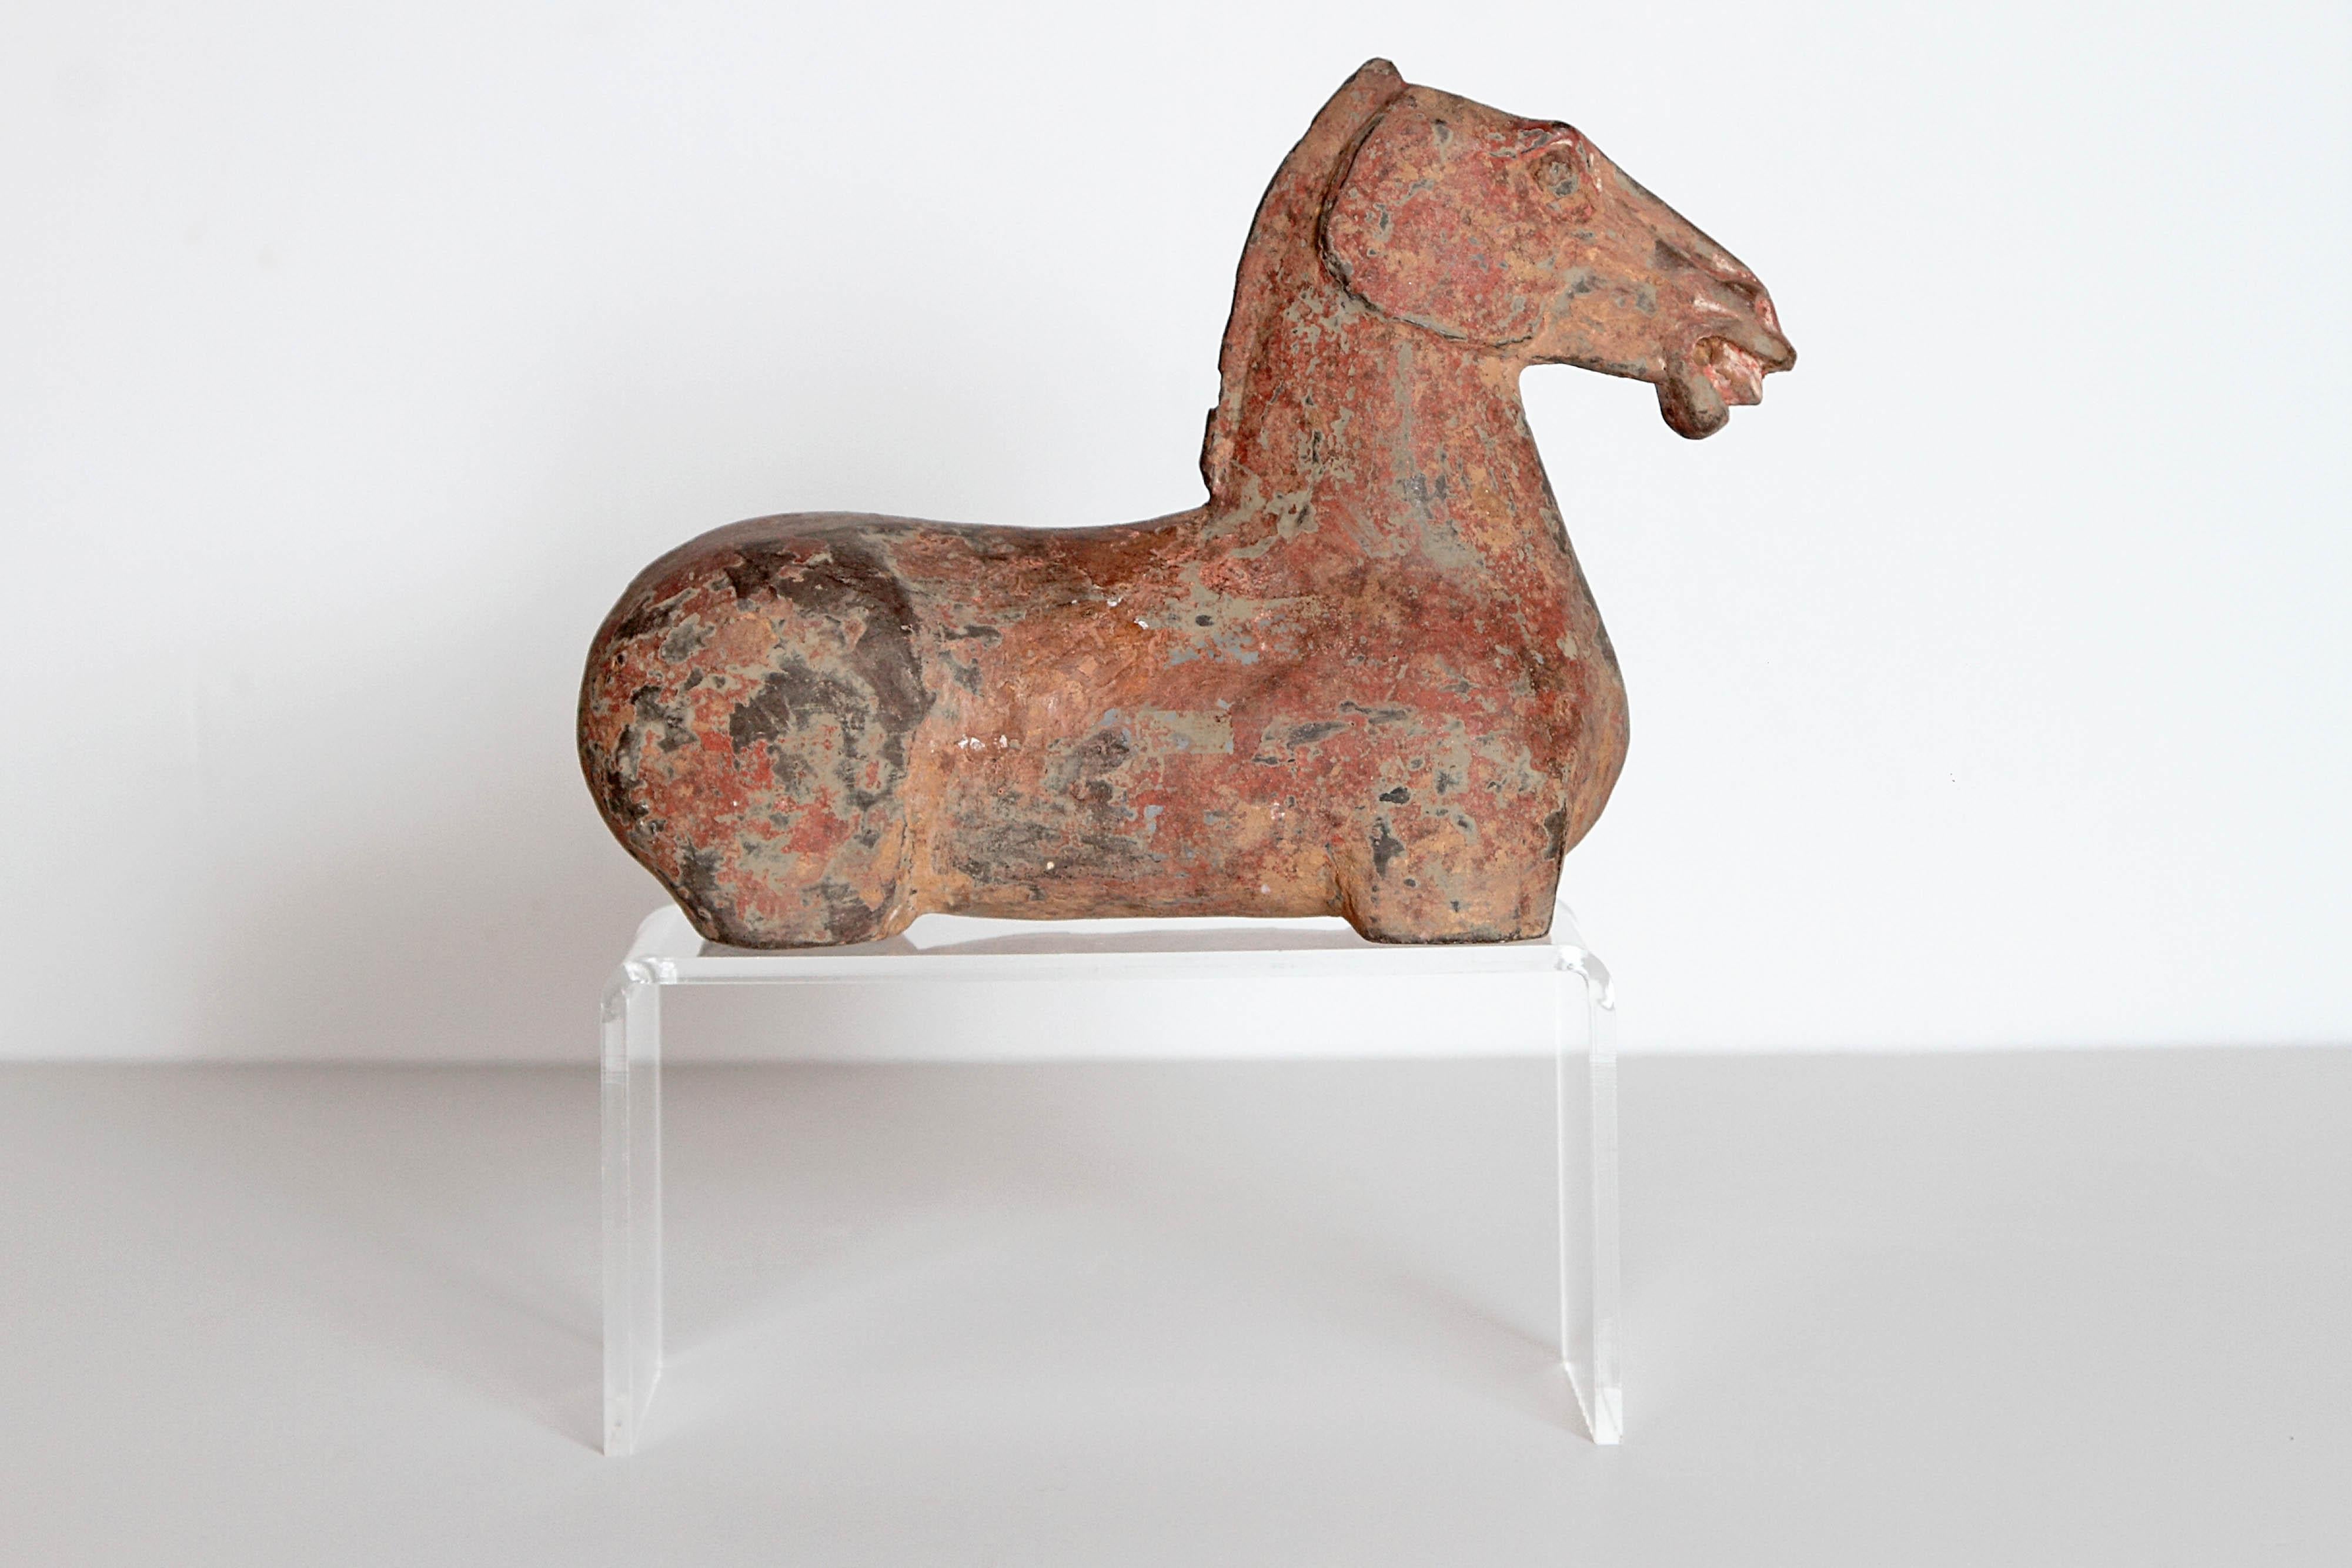 han dynasty horse sculpture